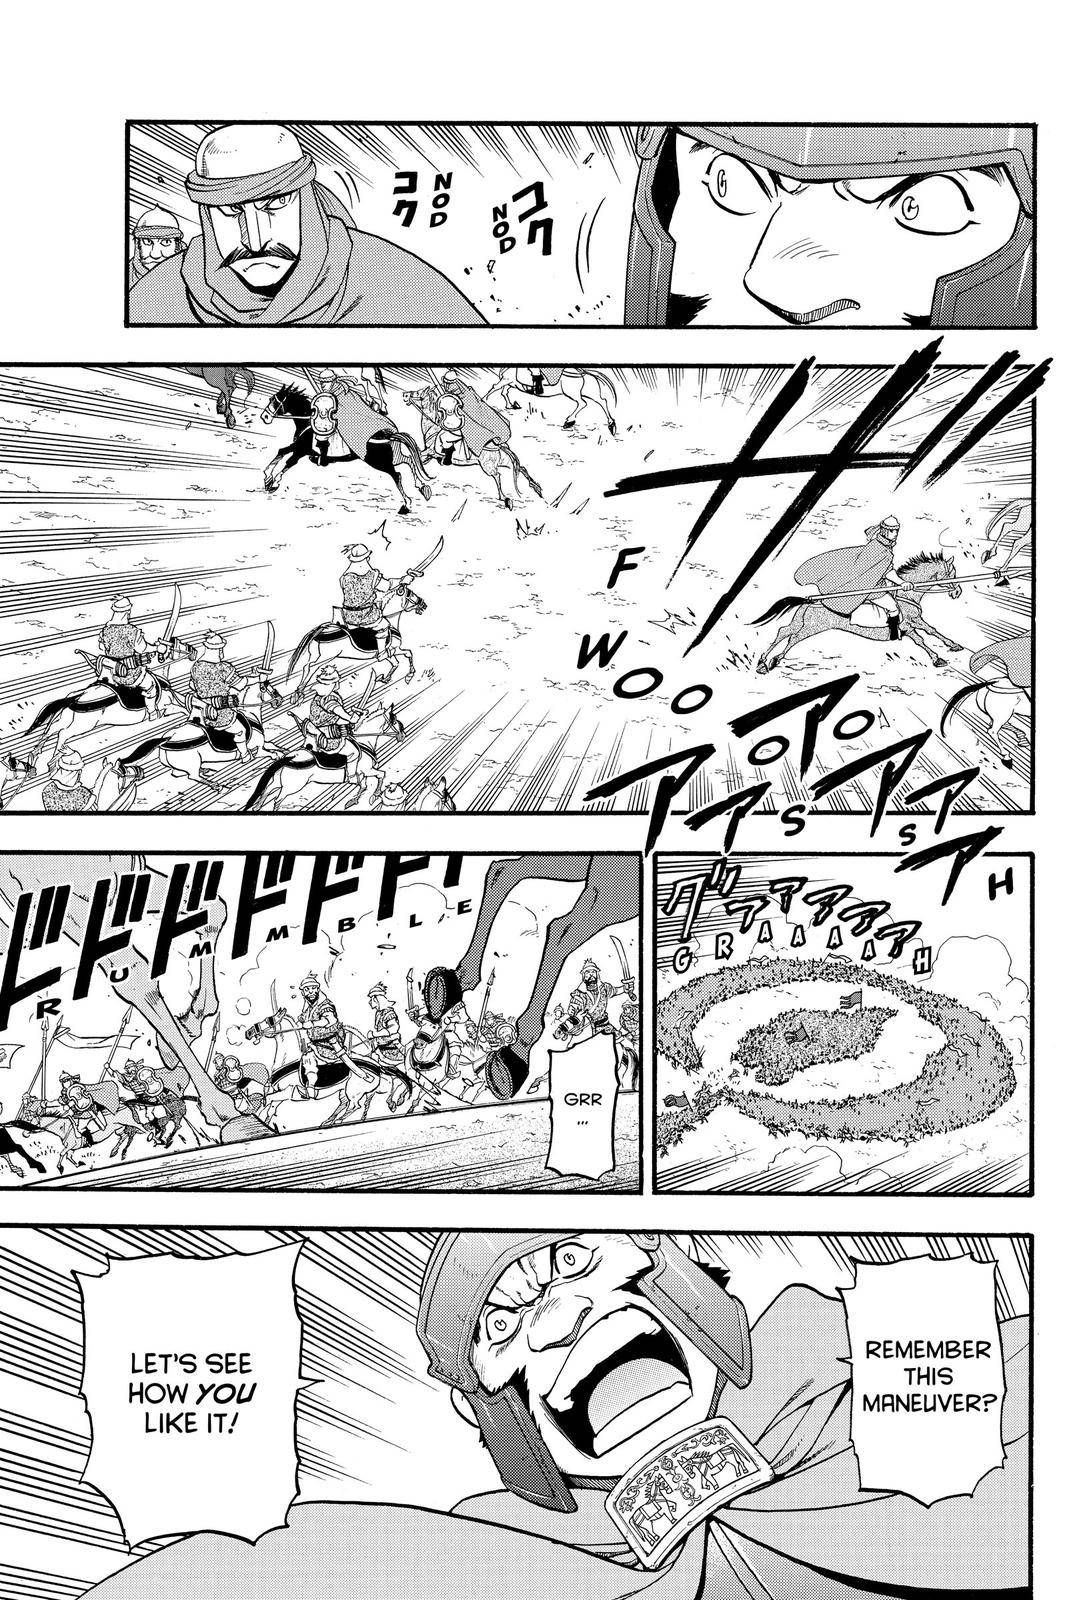 Arslan Senki (ARAKAWA Hiromu) chapter 84 page 5